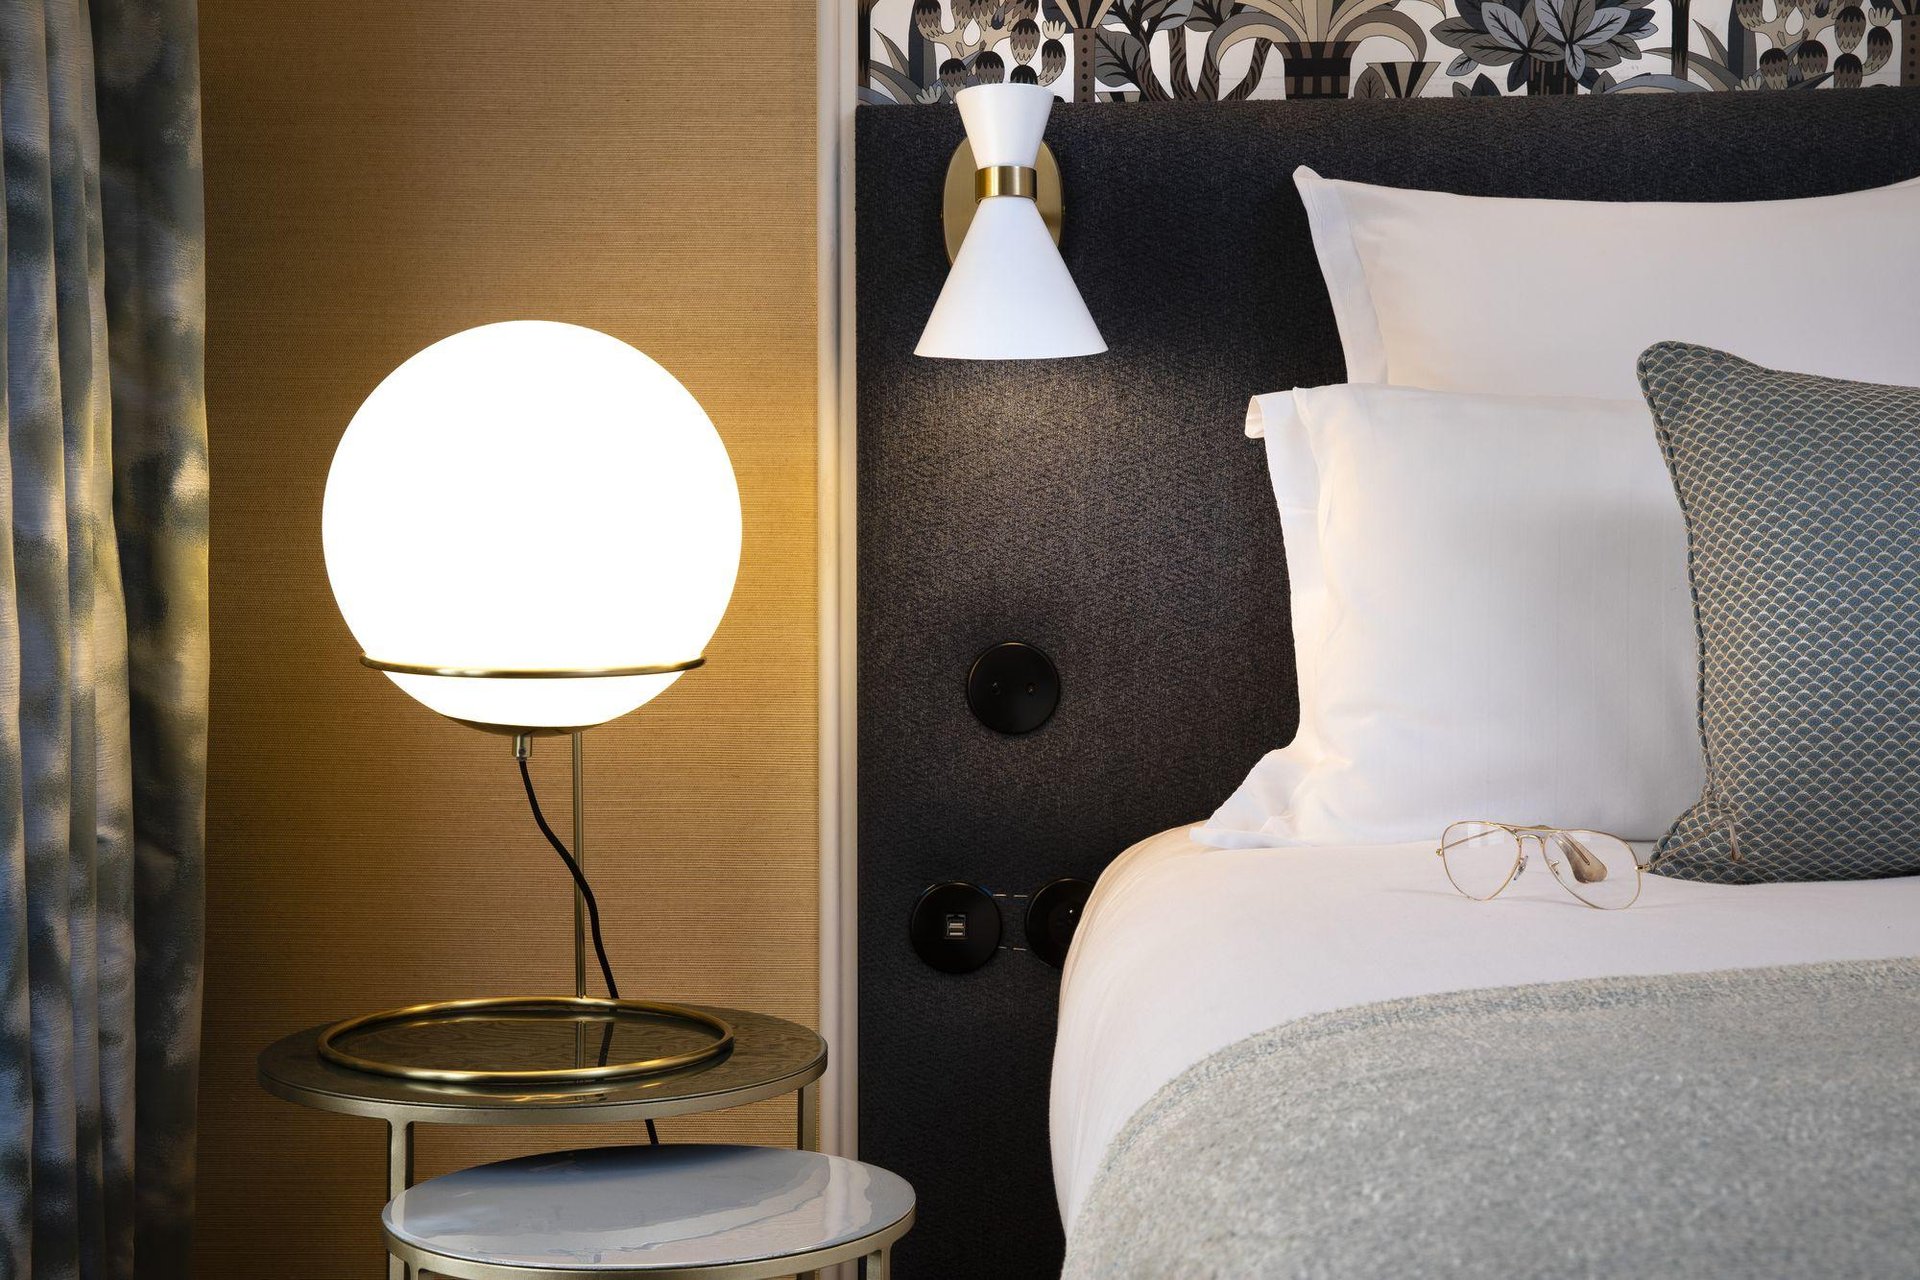 Close to Opera, Hotel Gramont Paris, aquatic inspiration travel in double bedroom